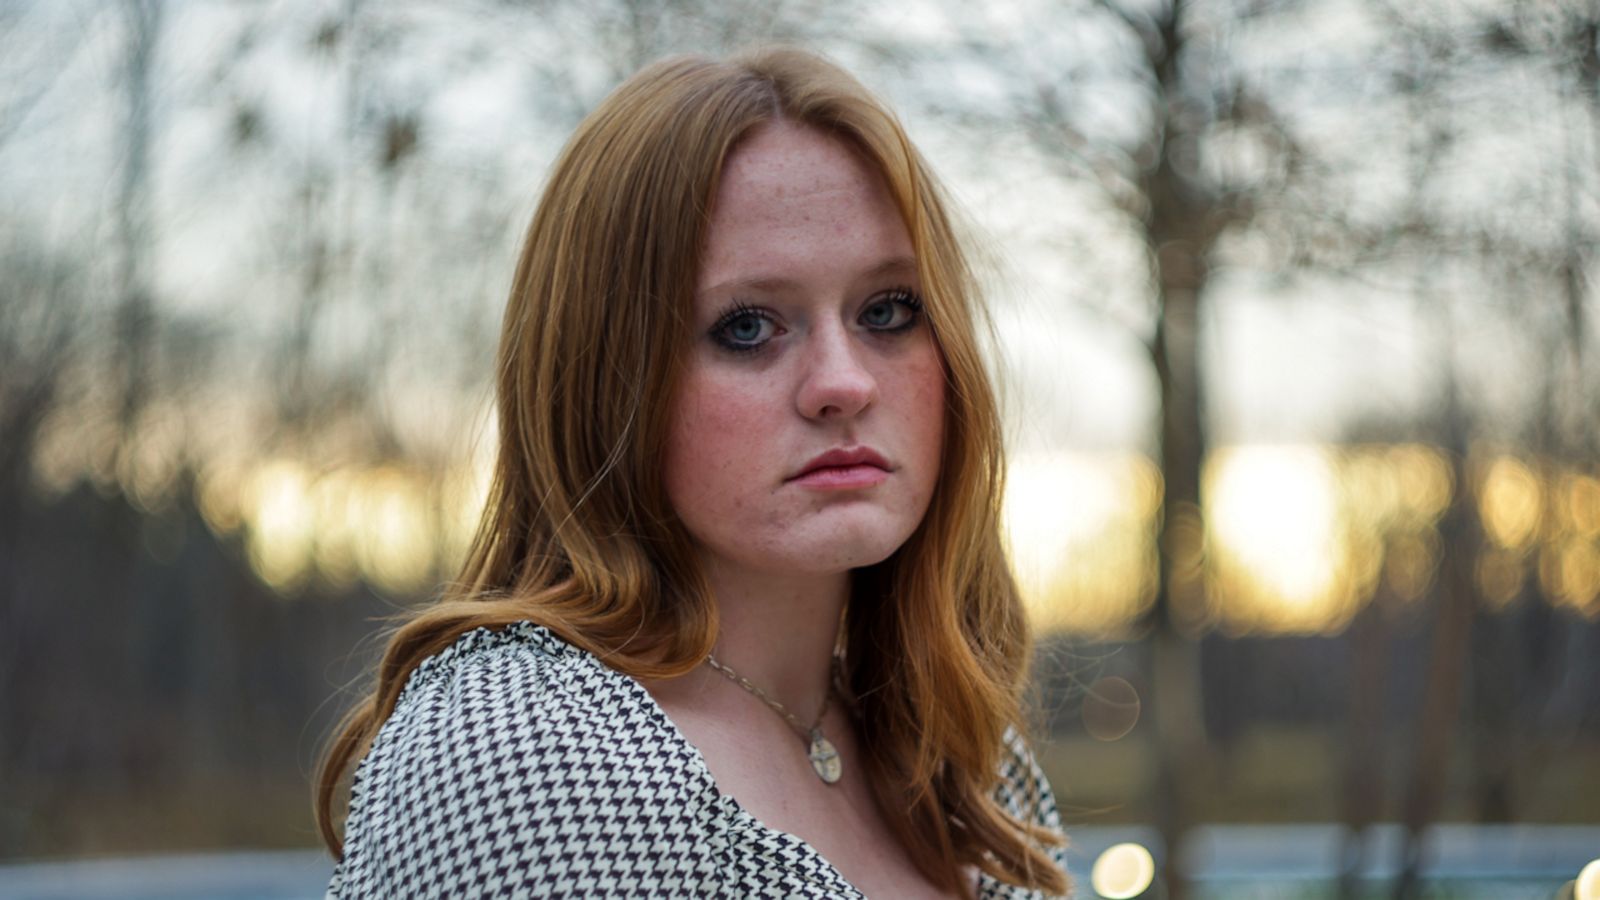 VIDEO: Sandy Hook school shooting survivor Jackie Hegarty writes to future survivors